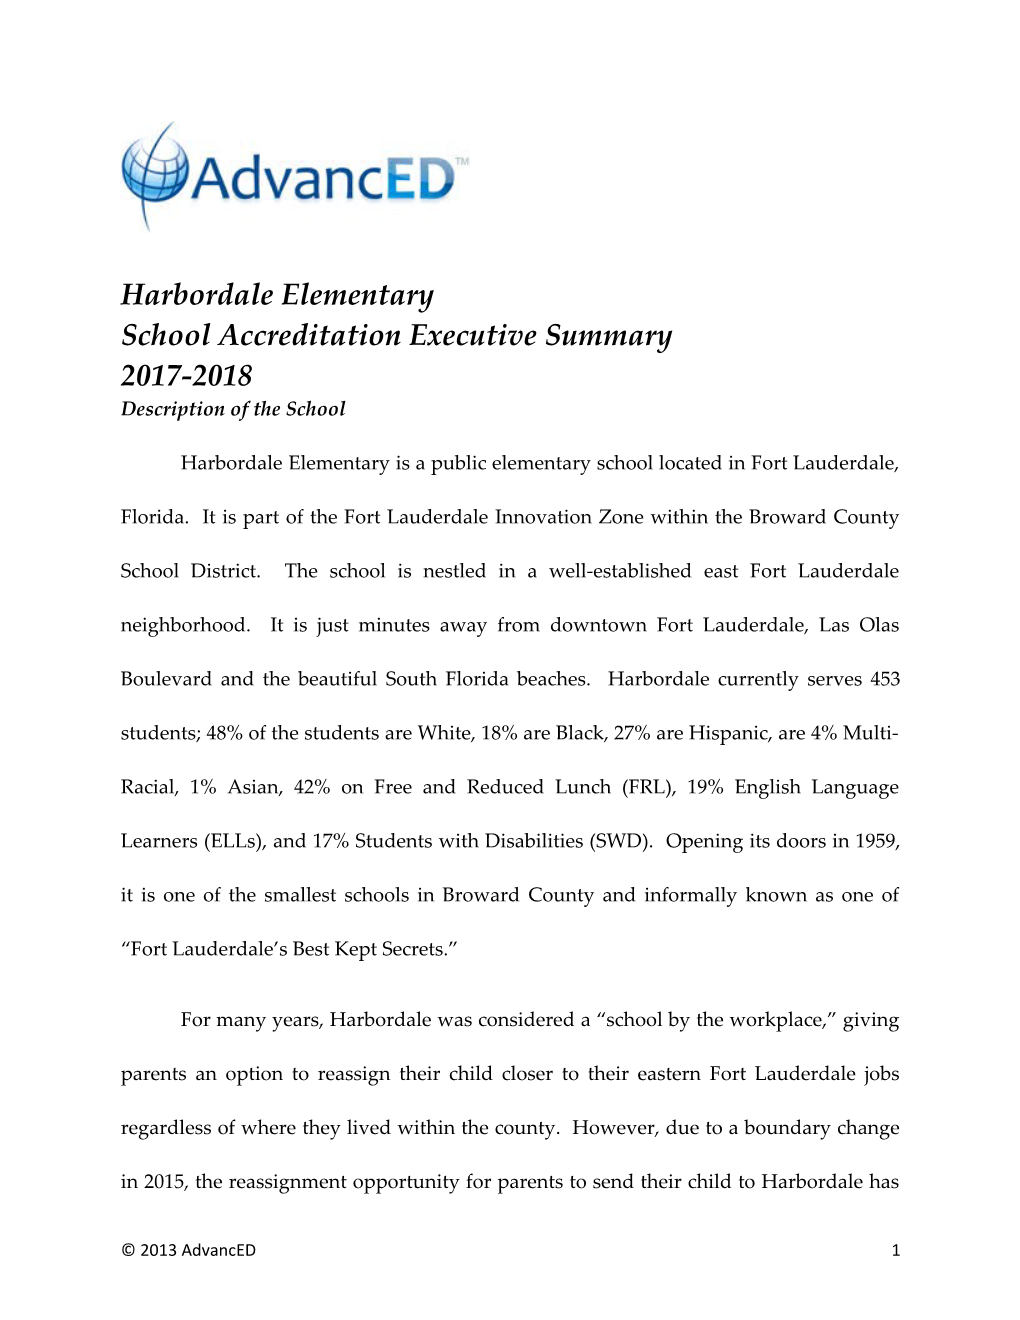 School Accreditation Executive Summary